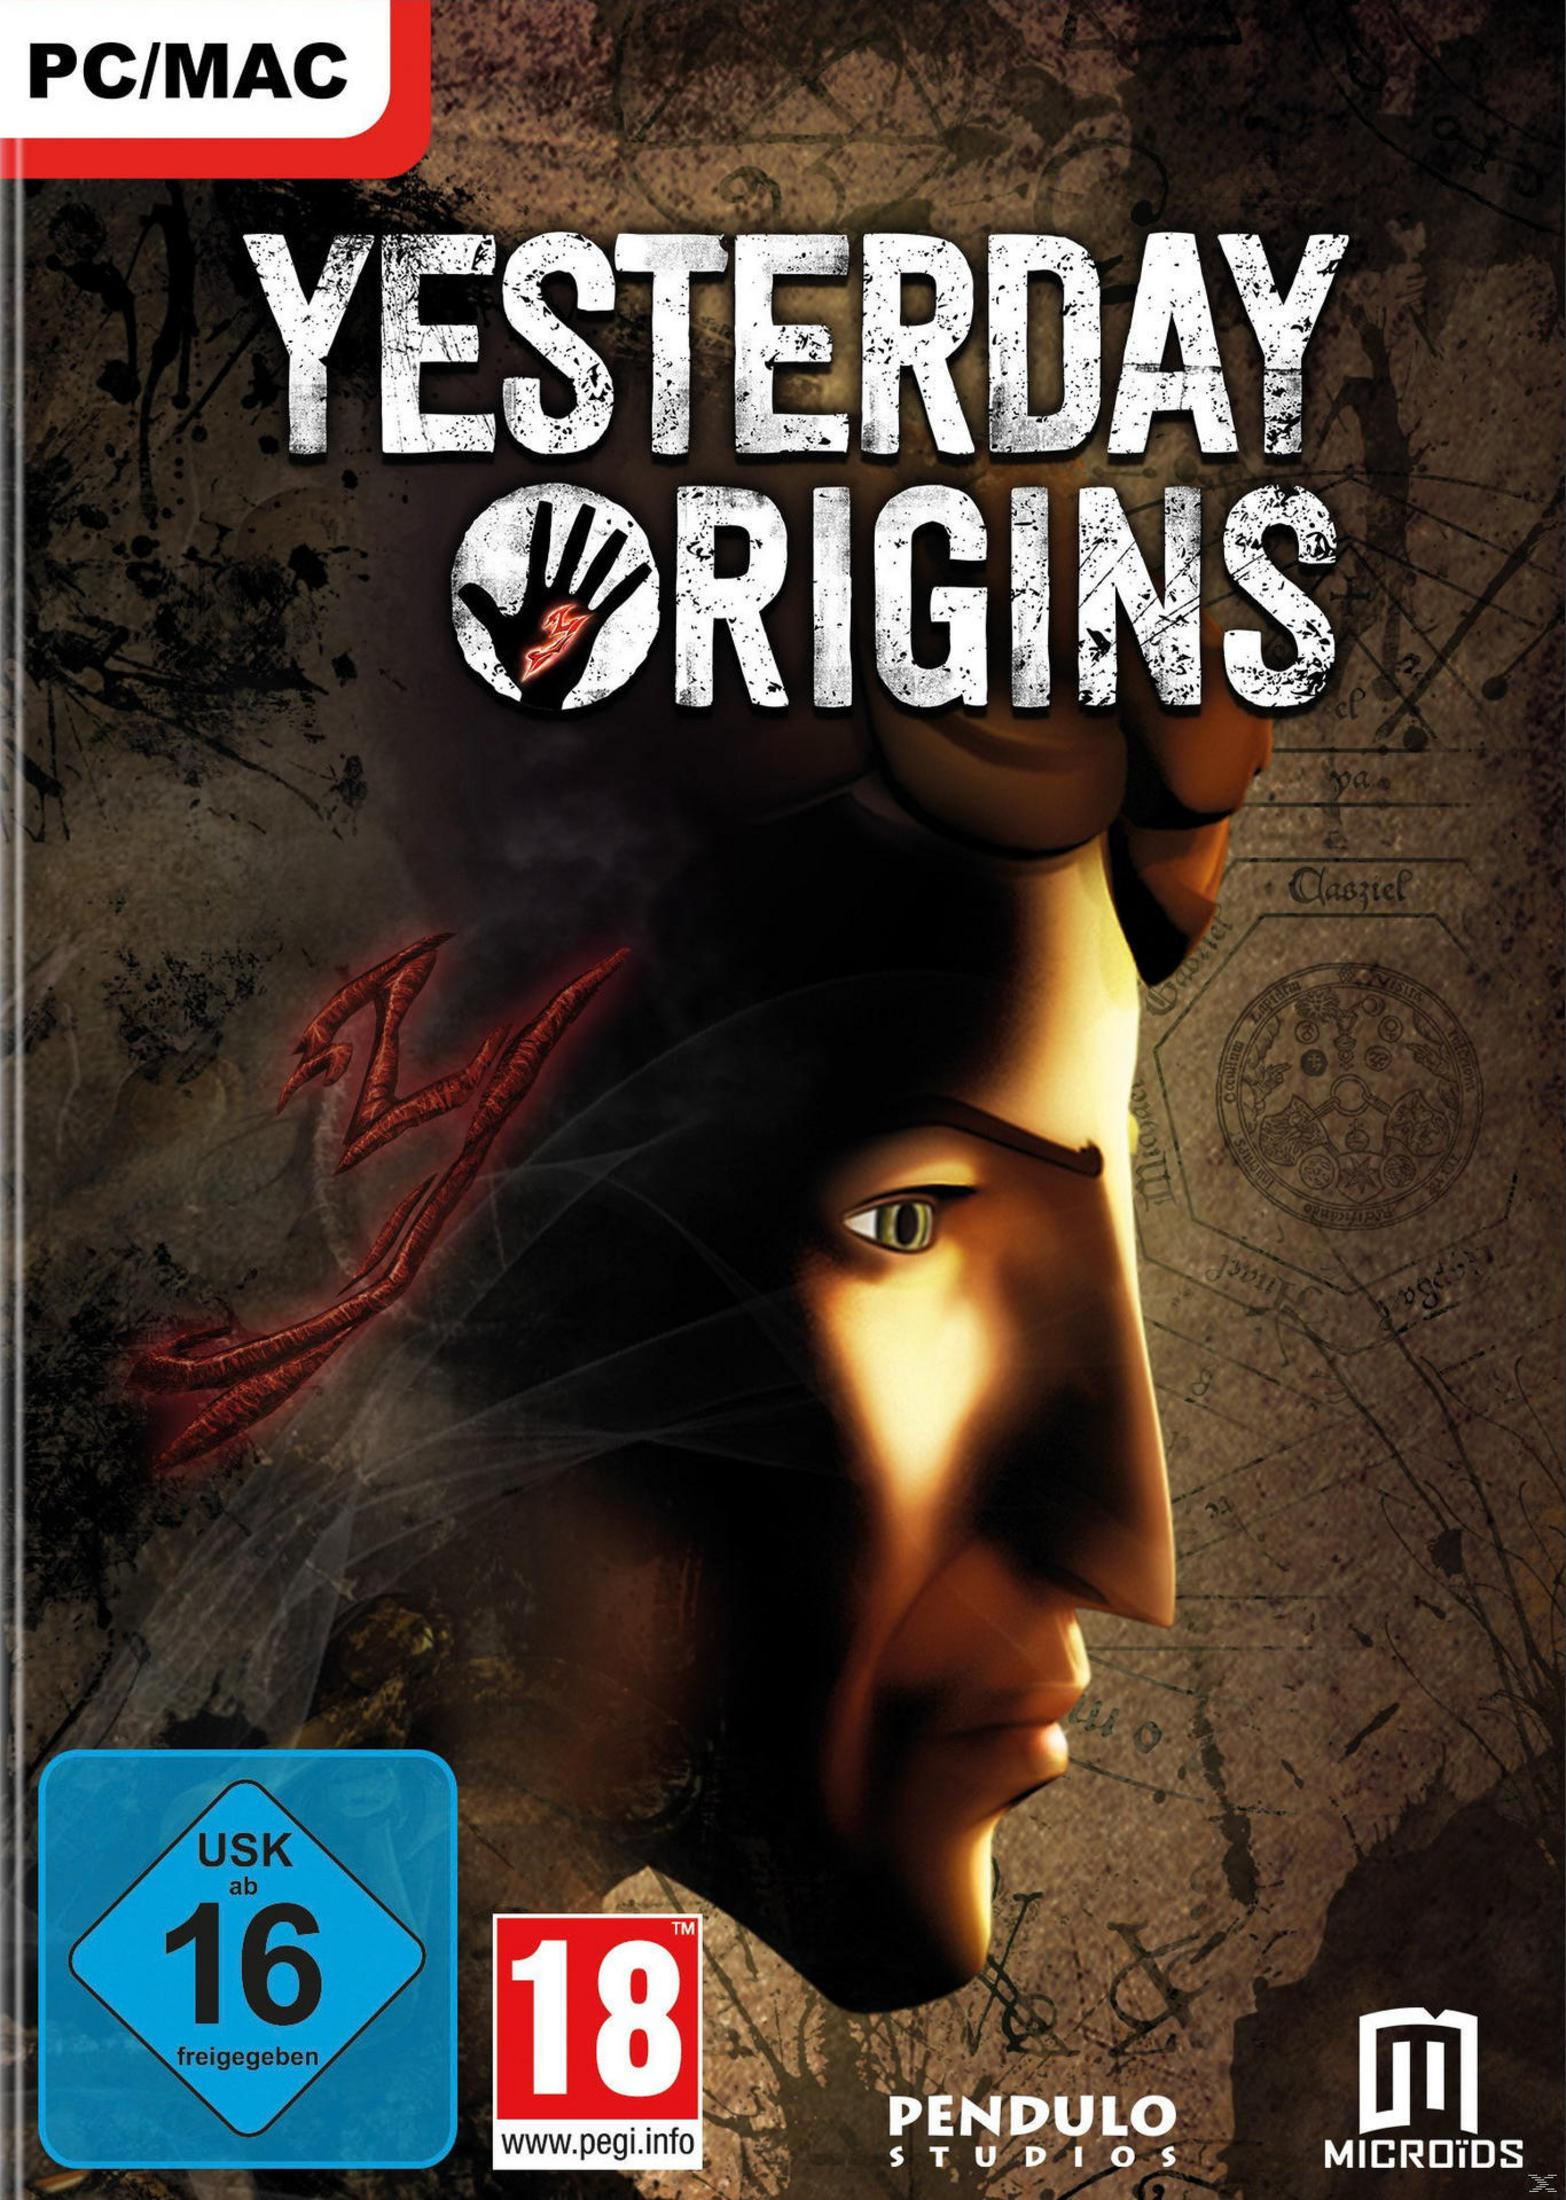 Yesterday Origins - [PC